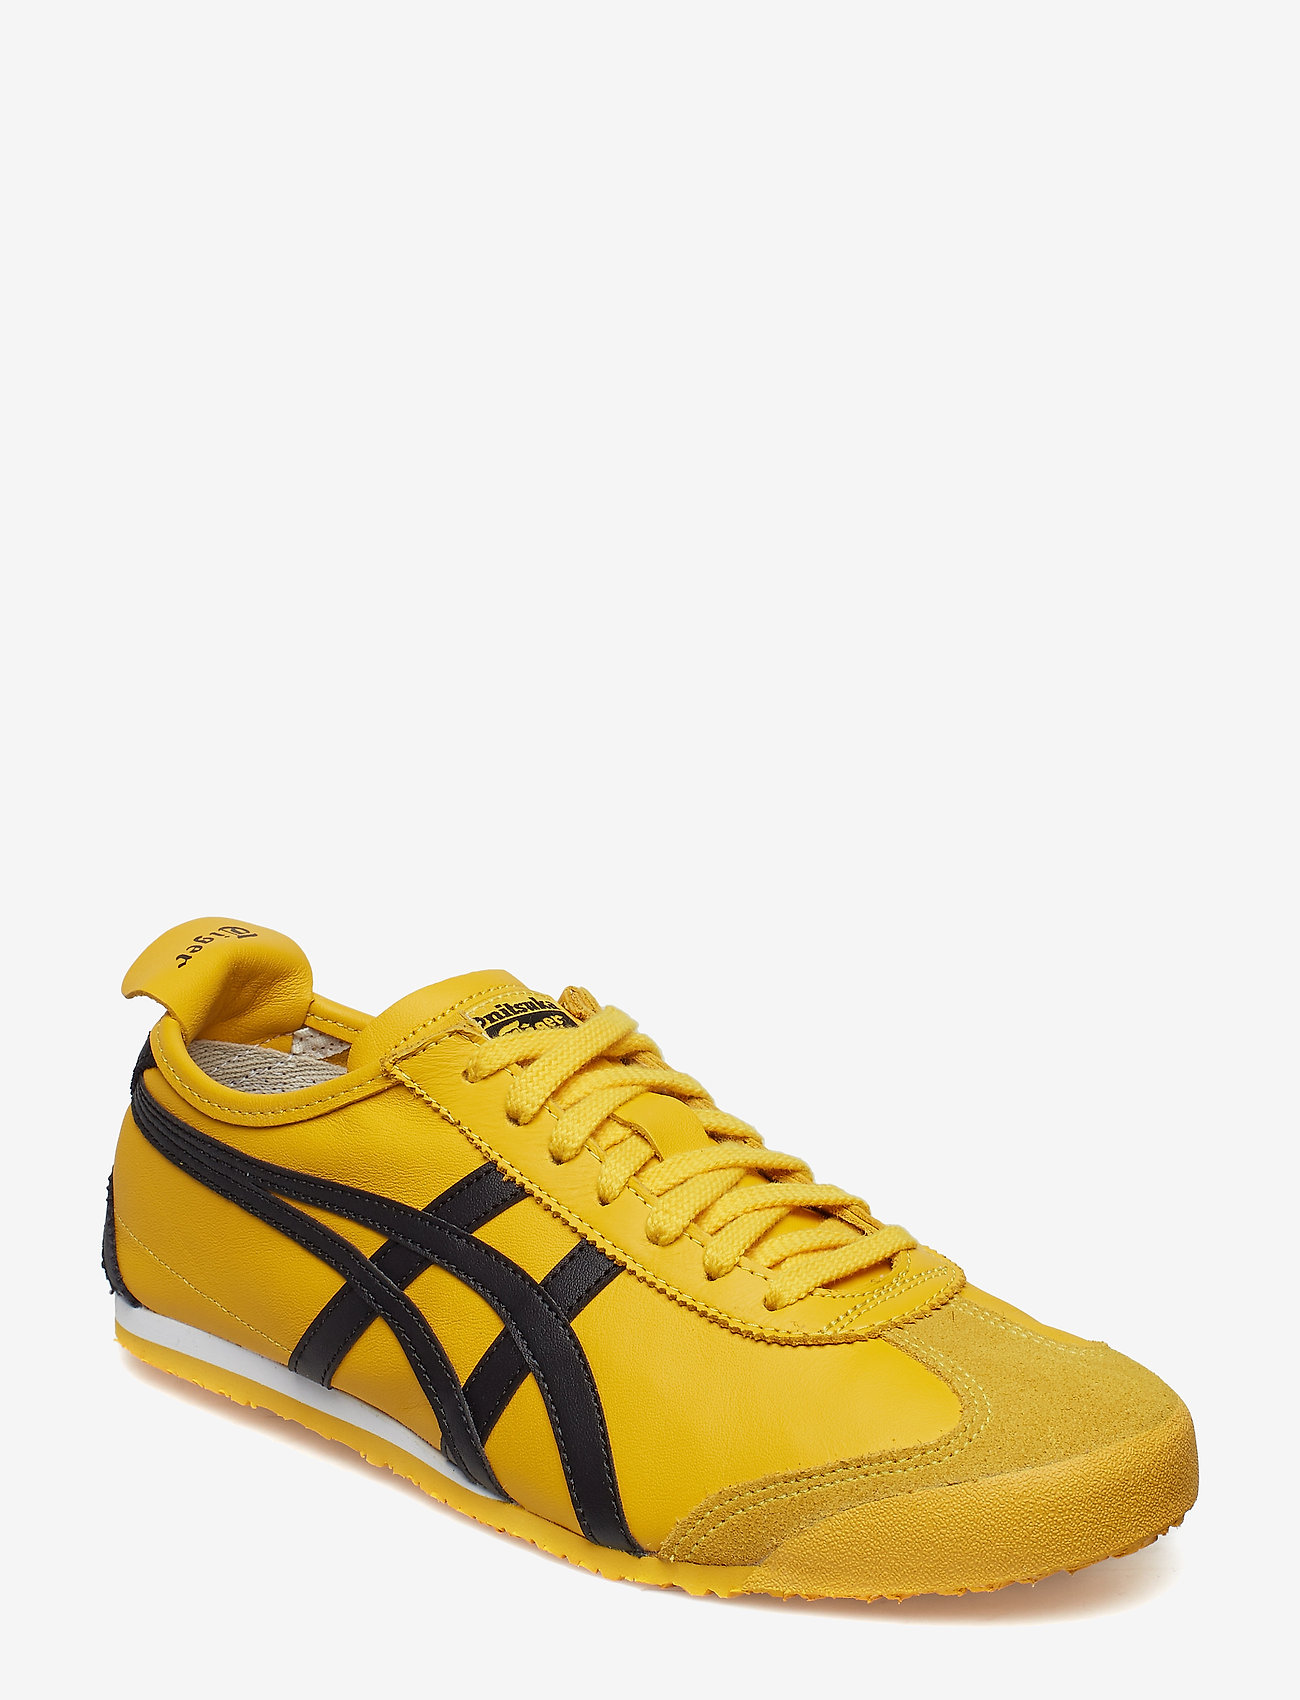 onitsuka tiger shoes yellow black